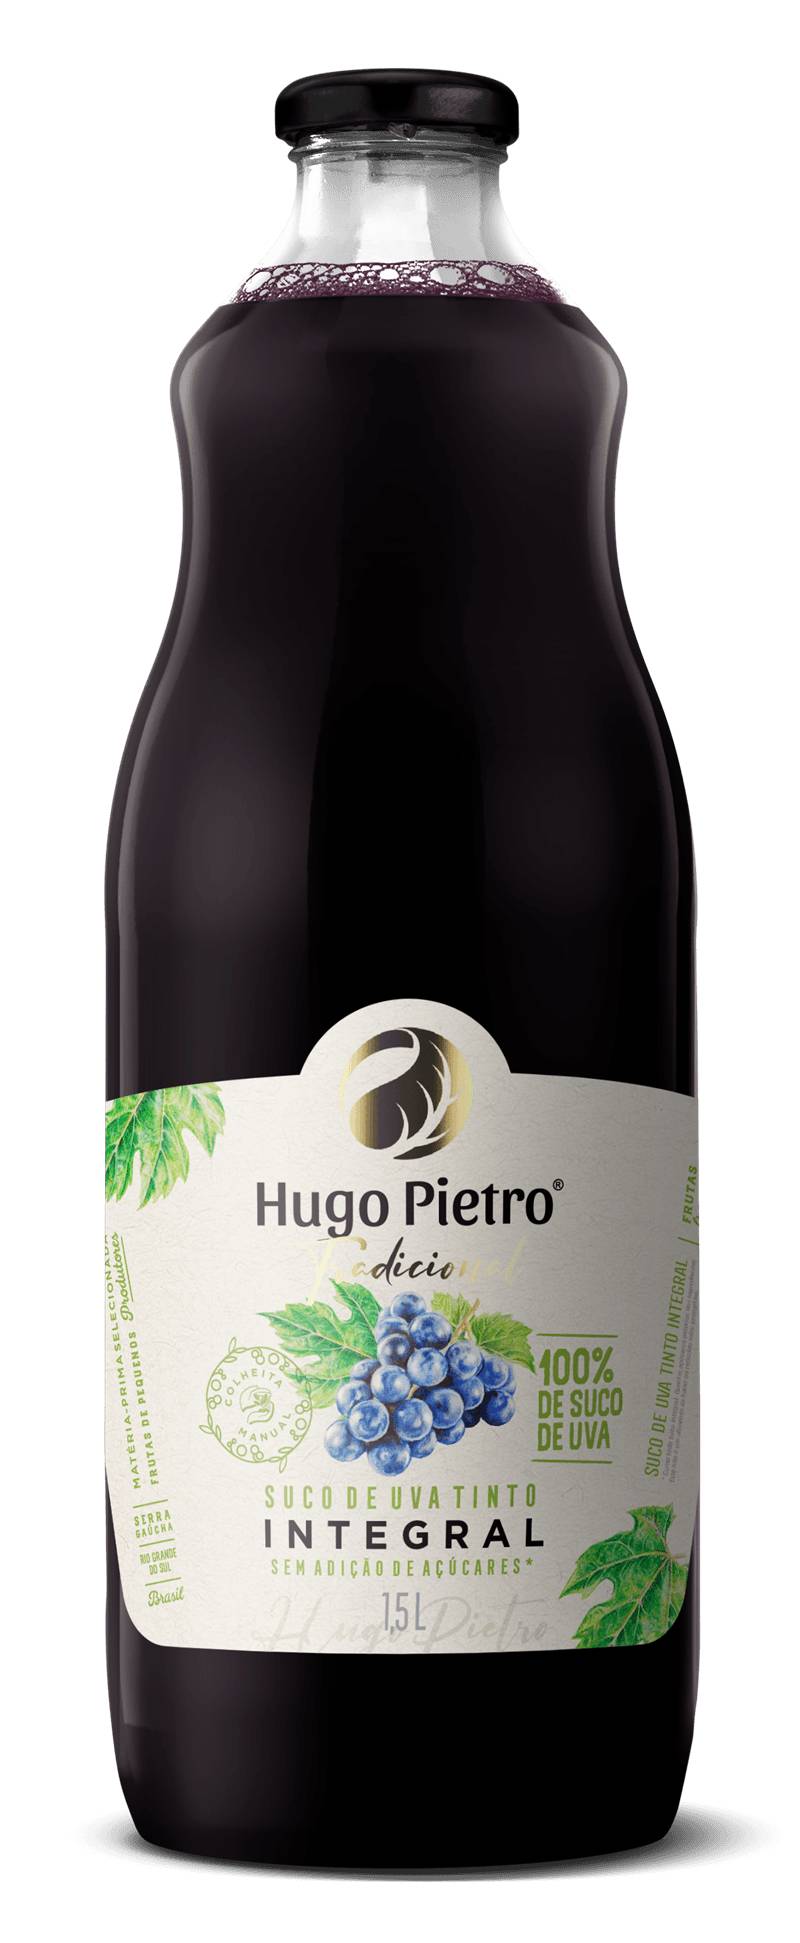 Hugo pietro suco de uva tinto integral tradicional (1.5 l)